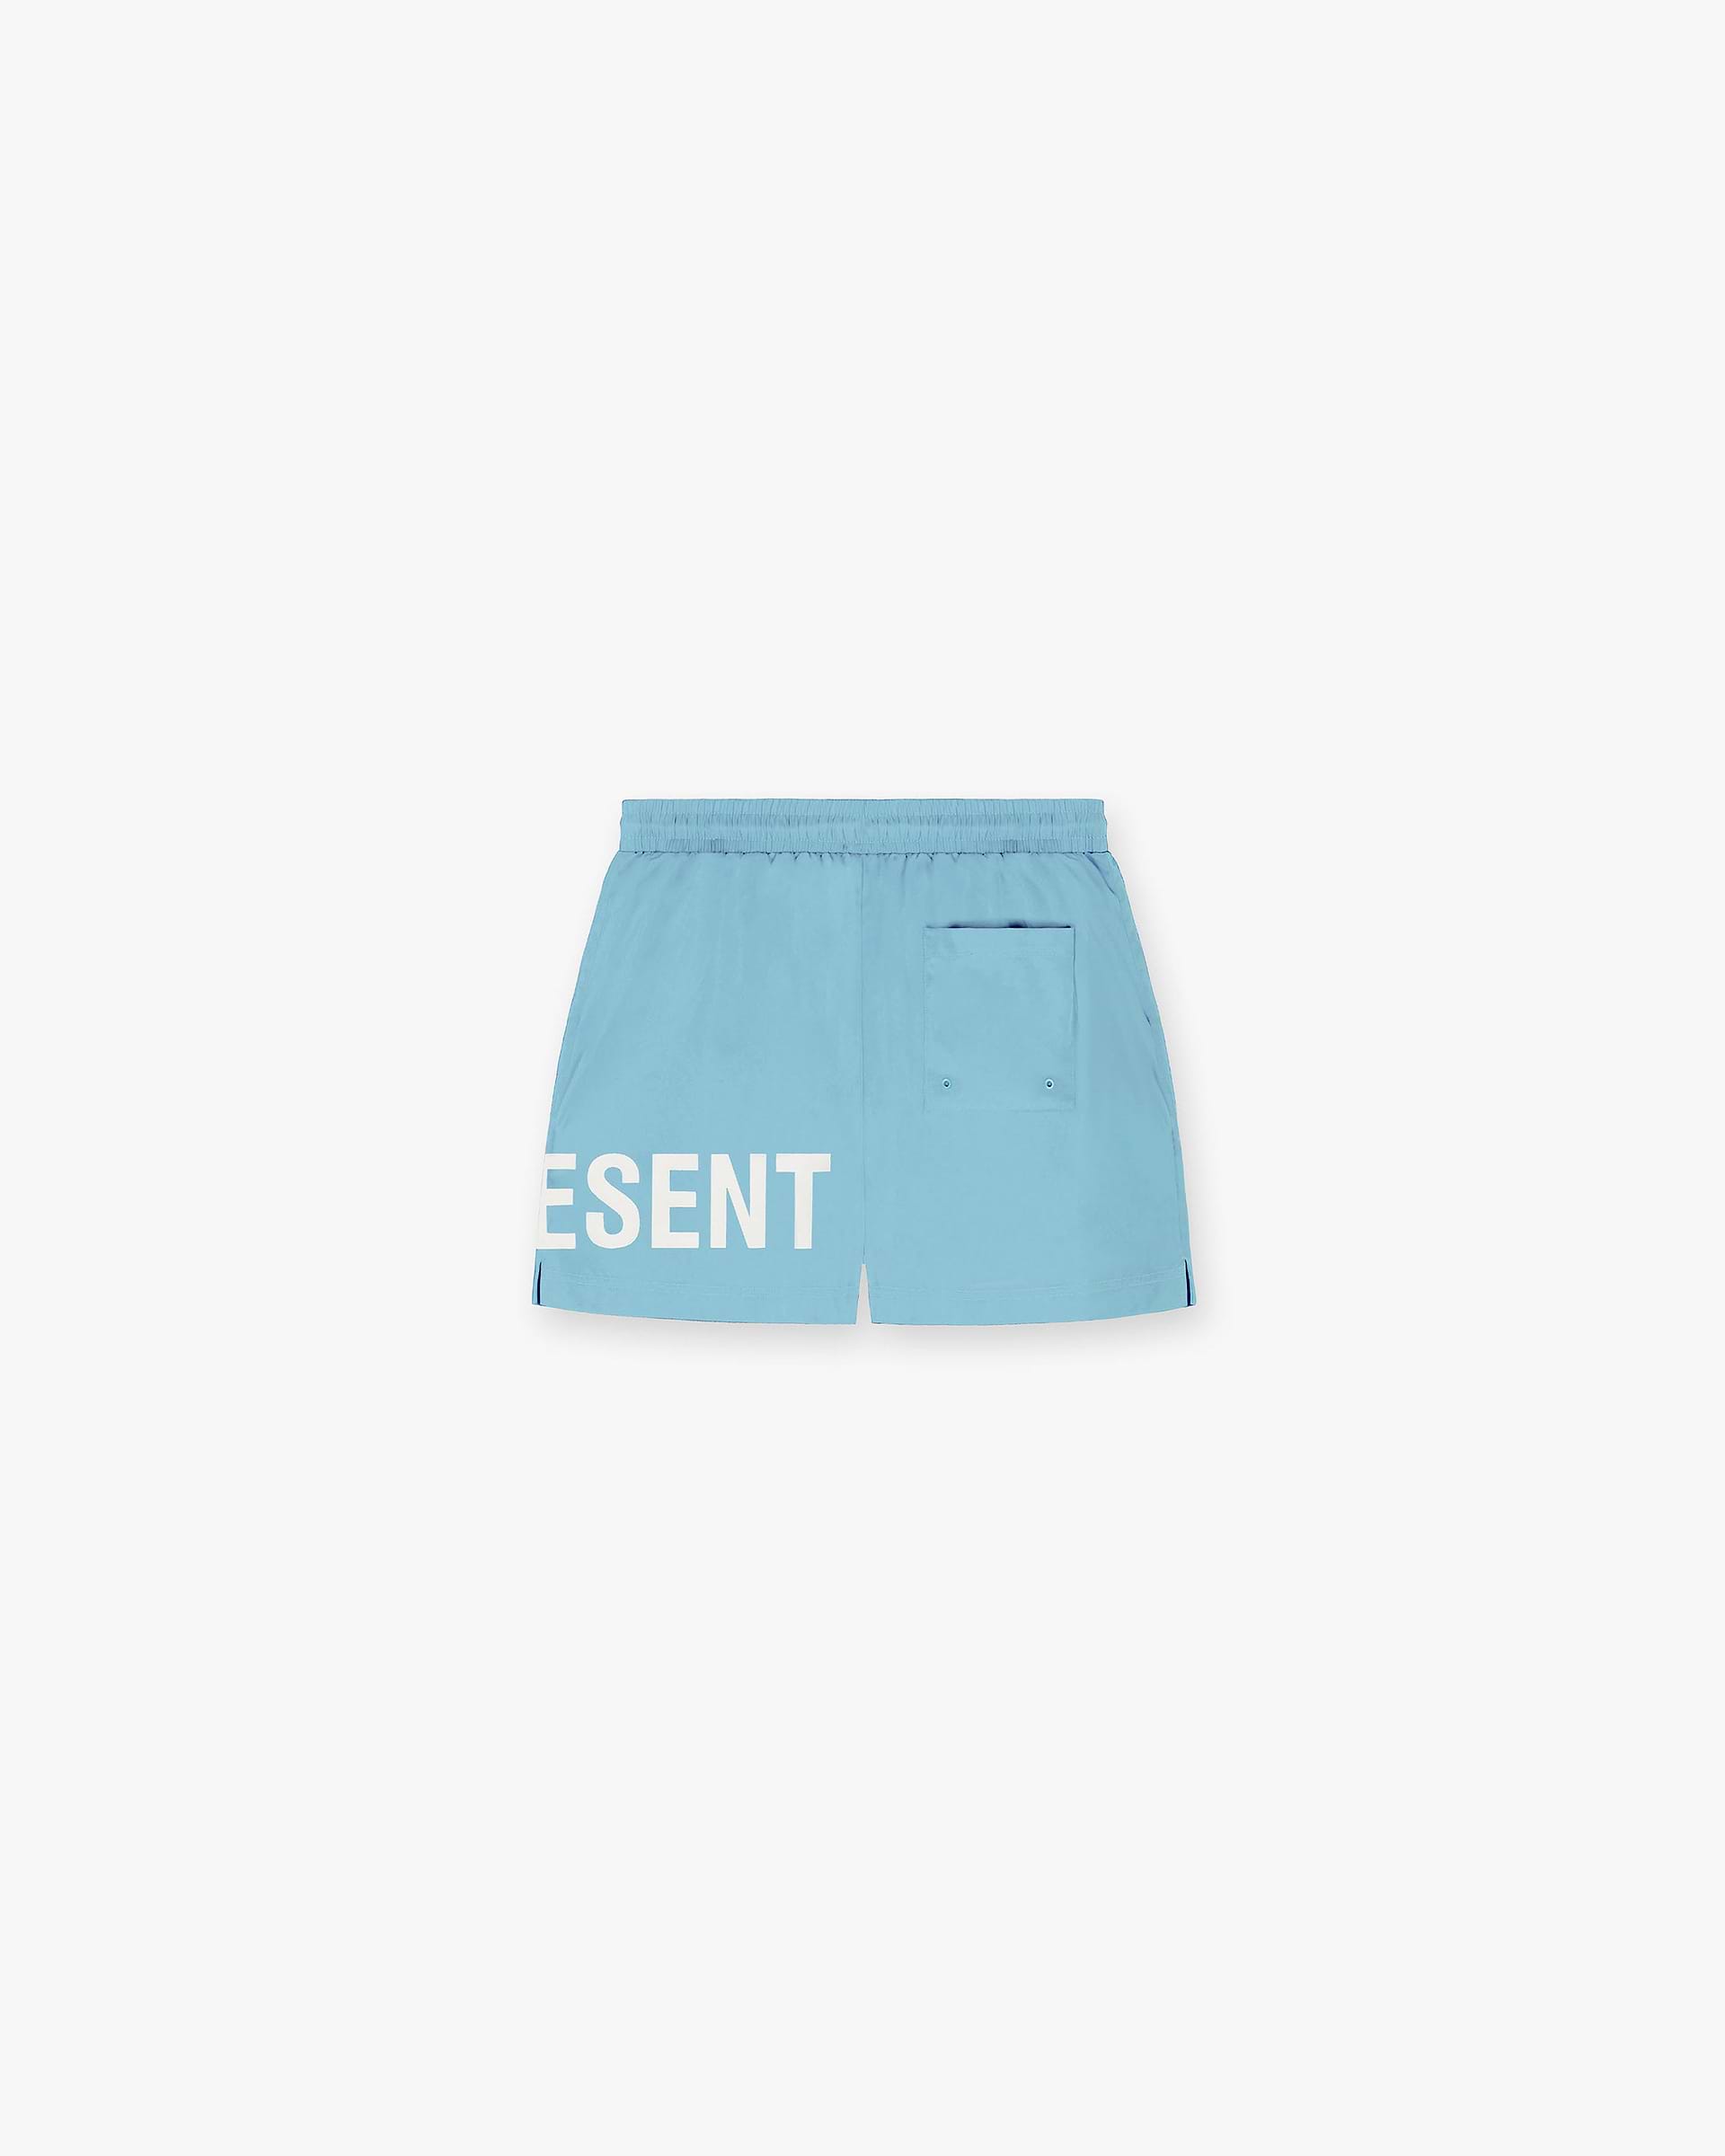 Swim Shorts | Powder Blue Shorts SC23 | Represent Clo